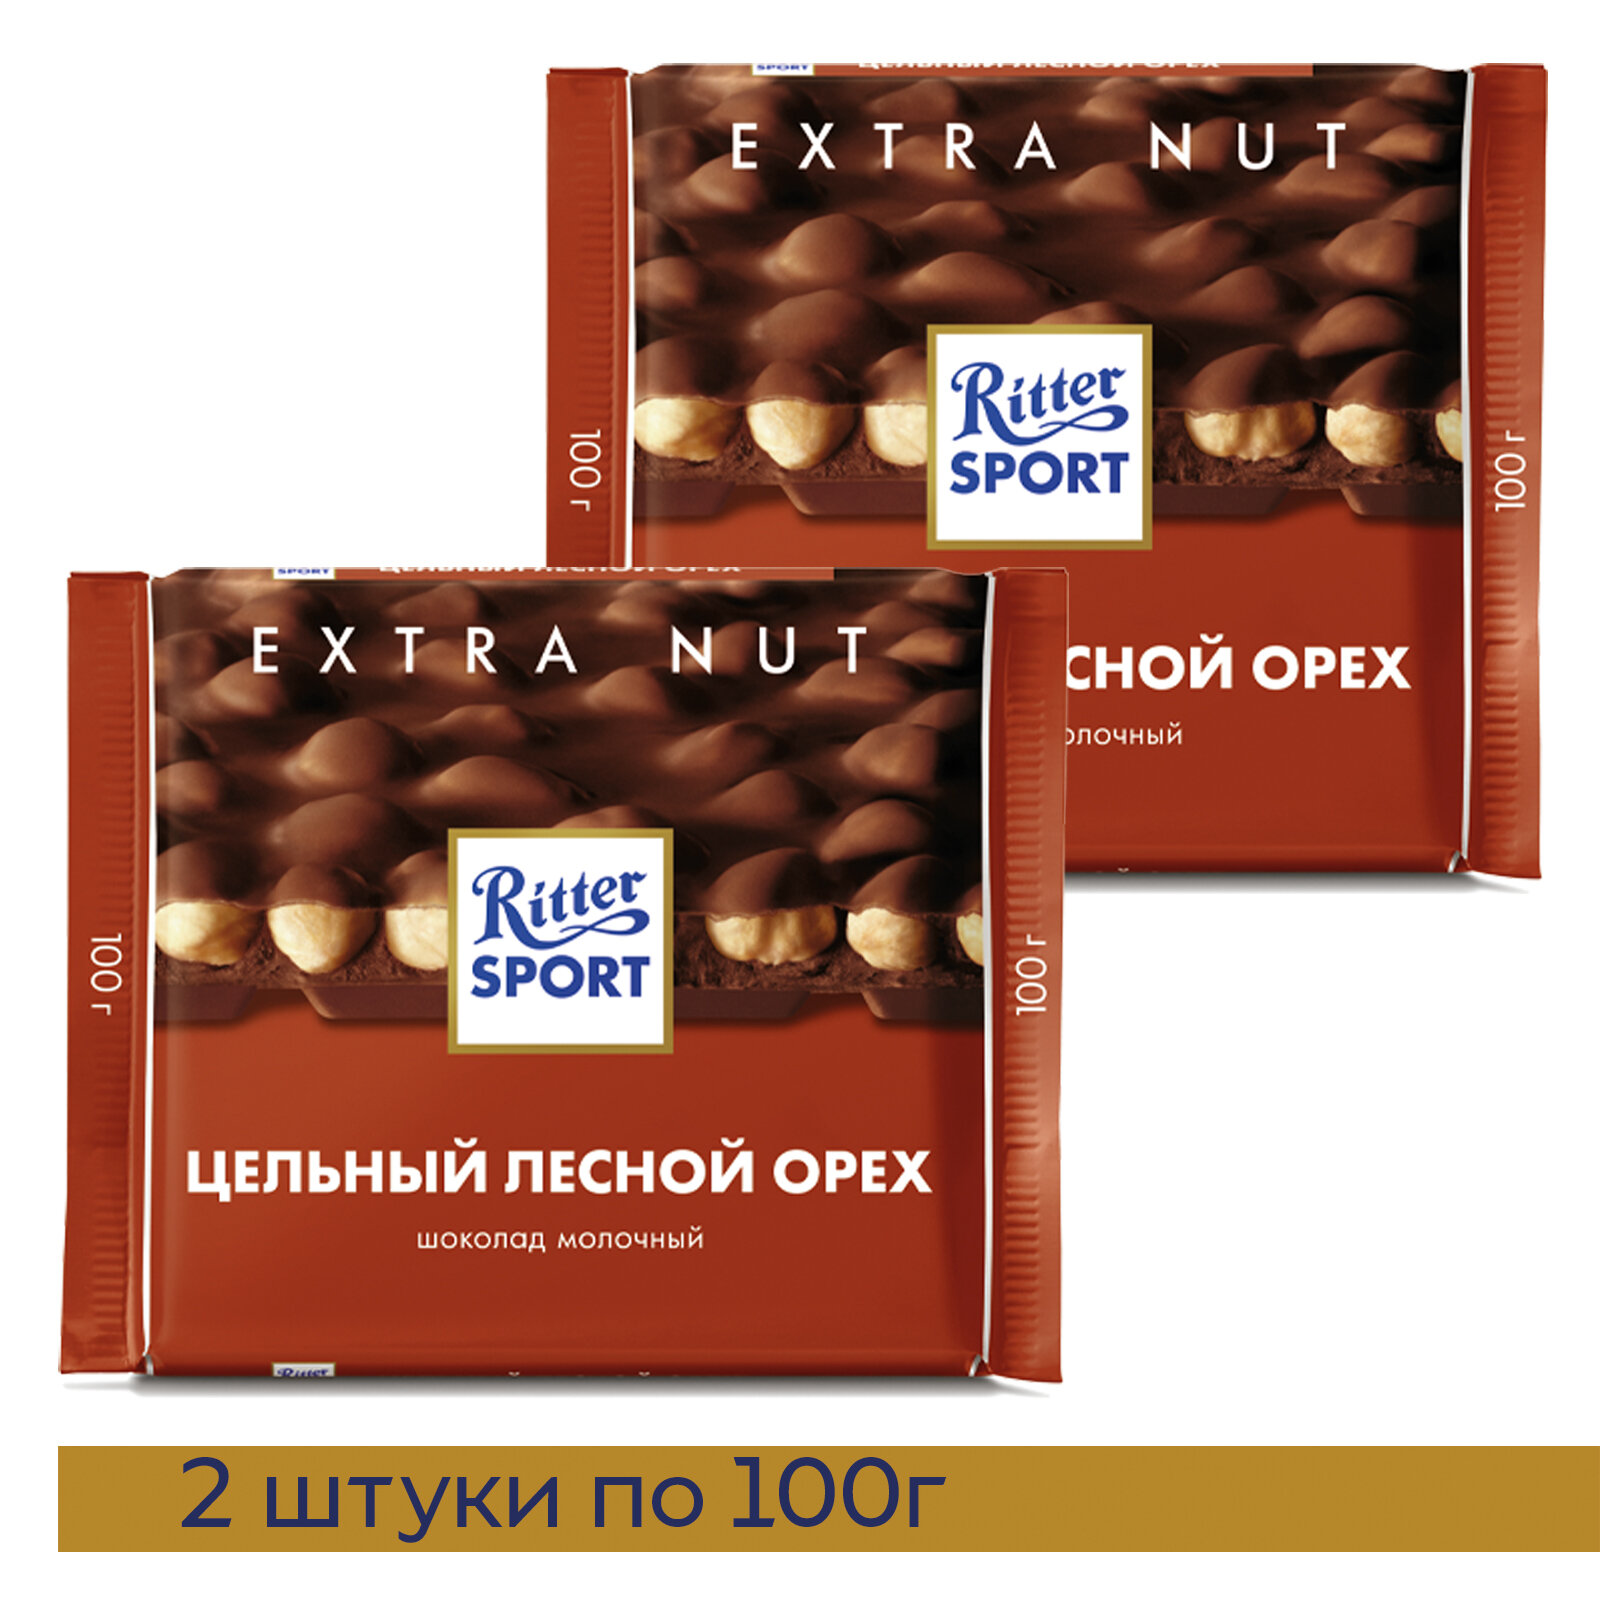 Шоколад молочный Ritter Sport Extra Nut, 2 штуки по 100г.